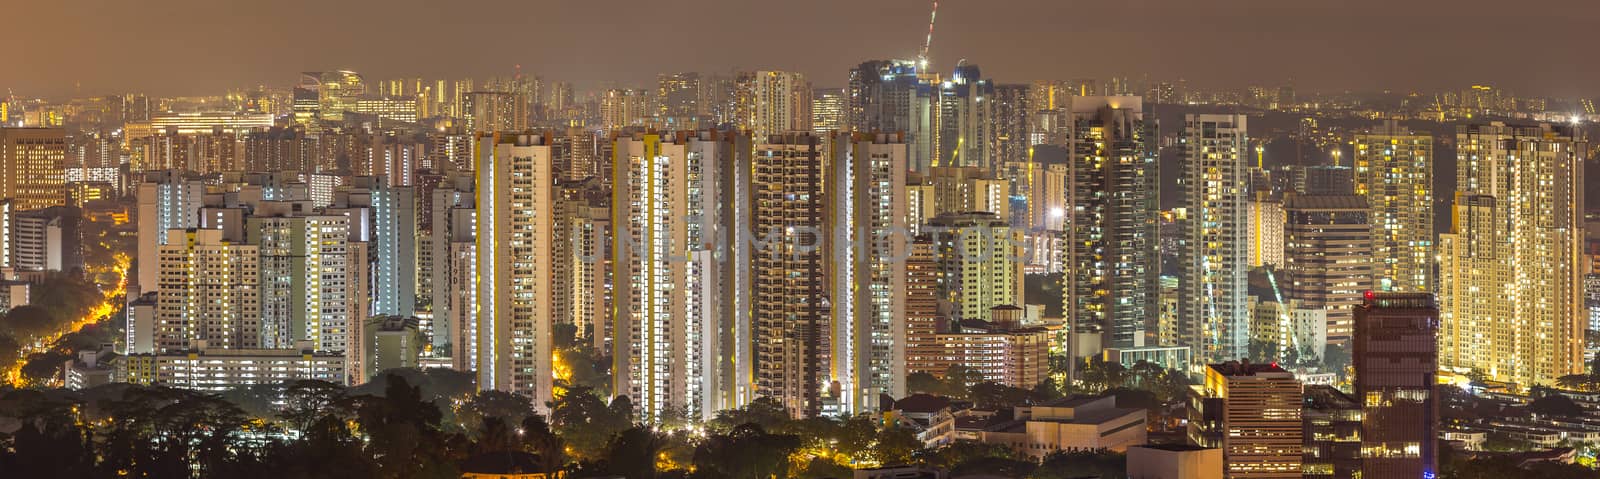 Panoramic of Singapore skyscraper at night